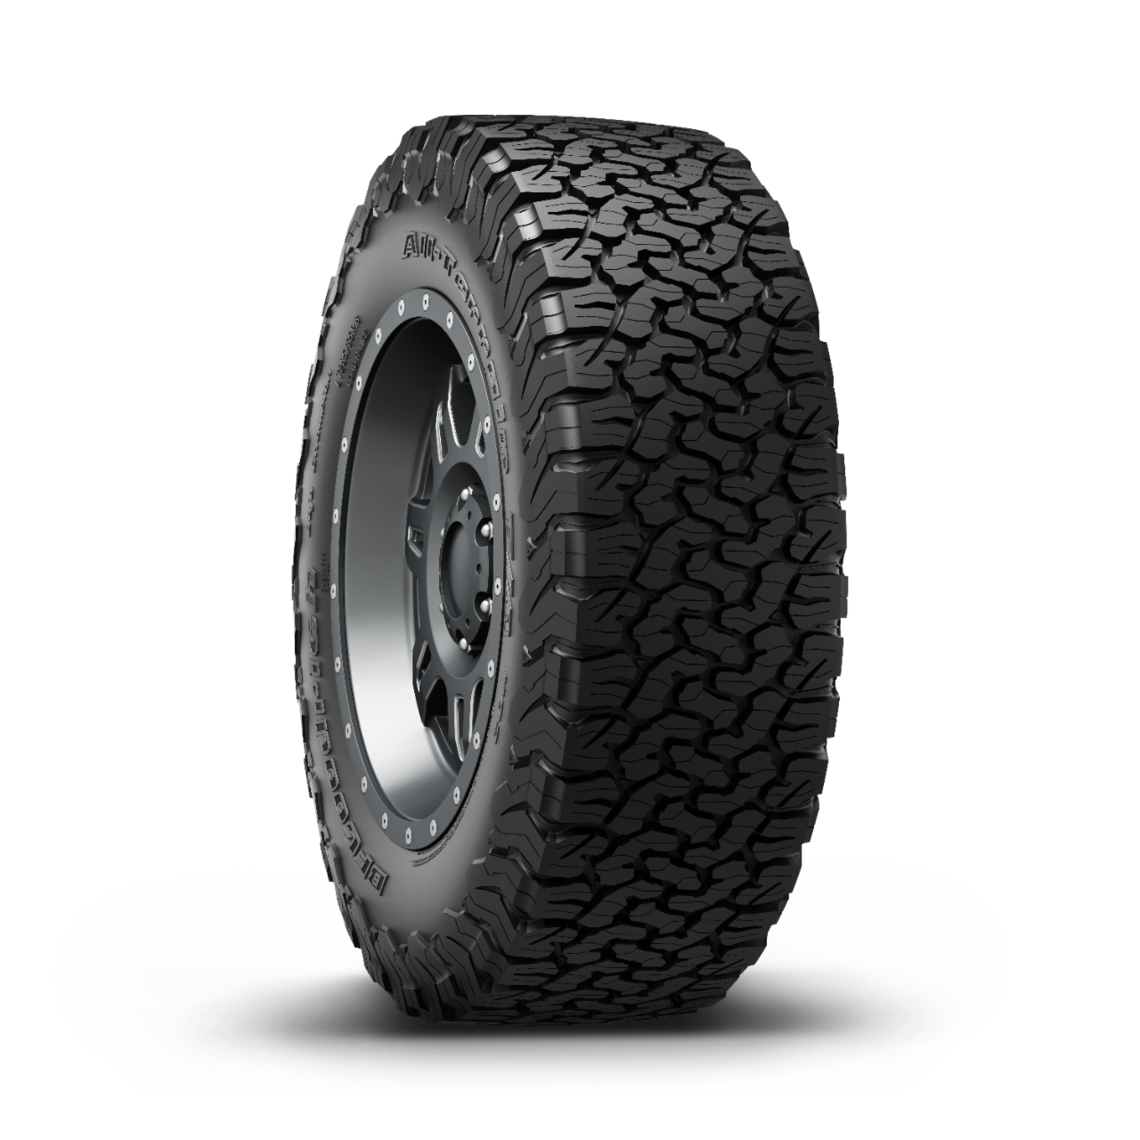 All-Terrain T/A KO2 4WD Tires | BFGoodrich MENA